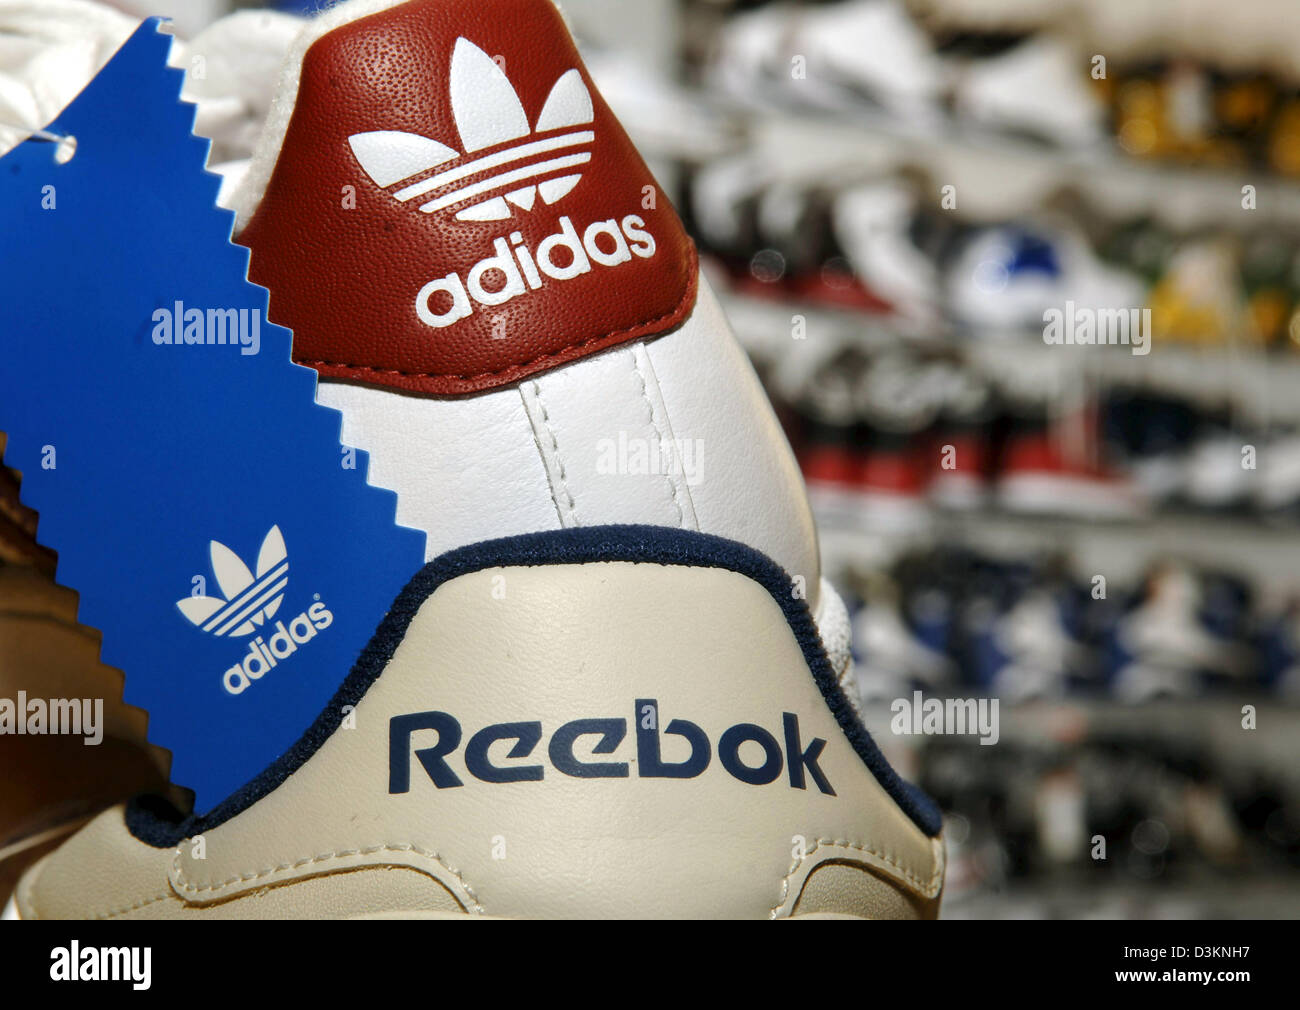 Адидас купил рибок. Adidas Reebok. Reebok суббренд адидас ?. Reebok & adidas 2005. Логотип адидас и рибок.